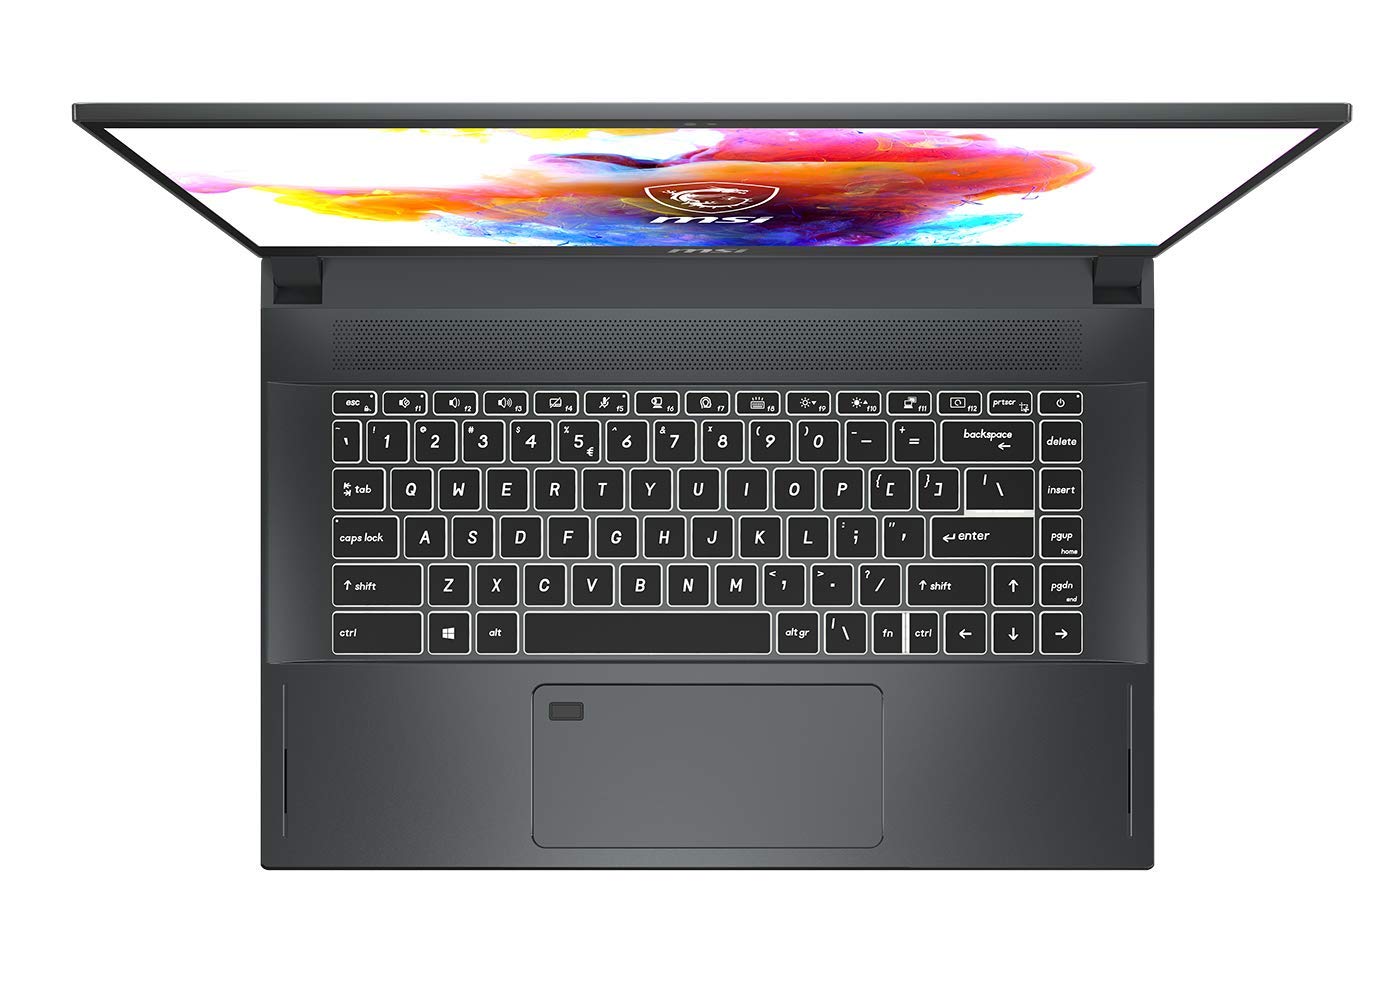 MSI Creator 15 A10SD-015 Gaming and Entertainment Laptop (Intel i7-10750H 6-Core, 32GB RAM, 2TB m.2 SATA SSD, GTX 1660 Ti, 15.6